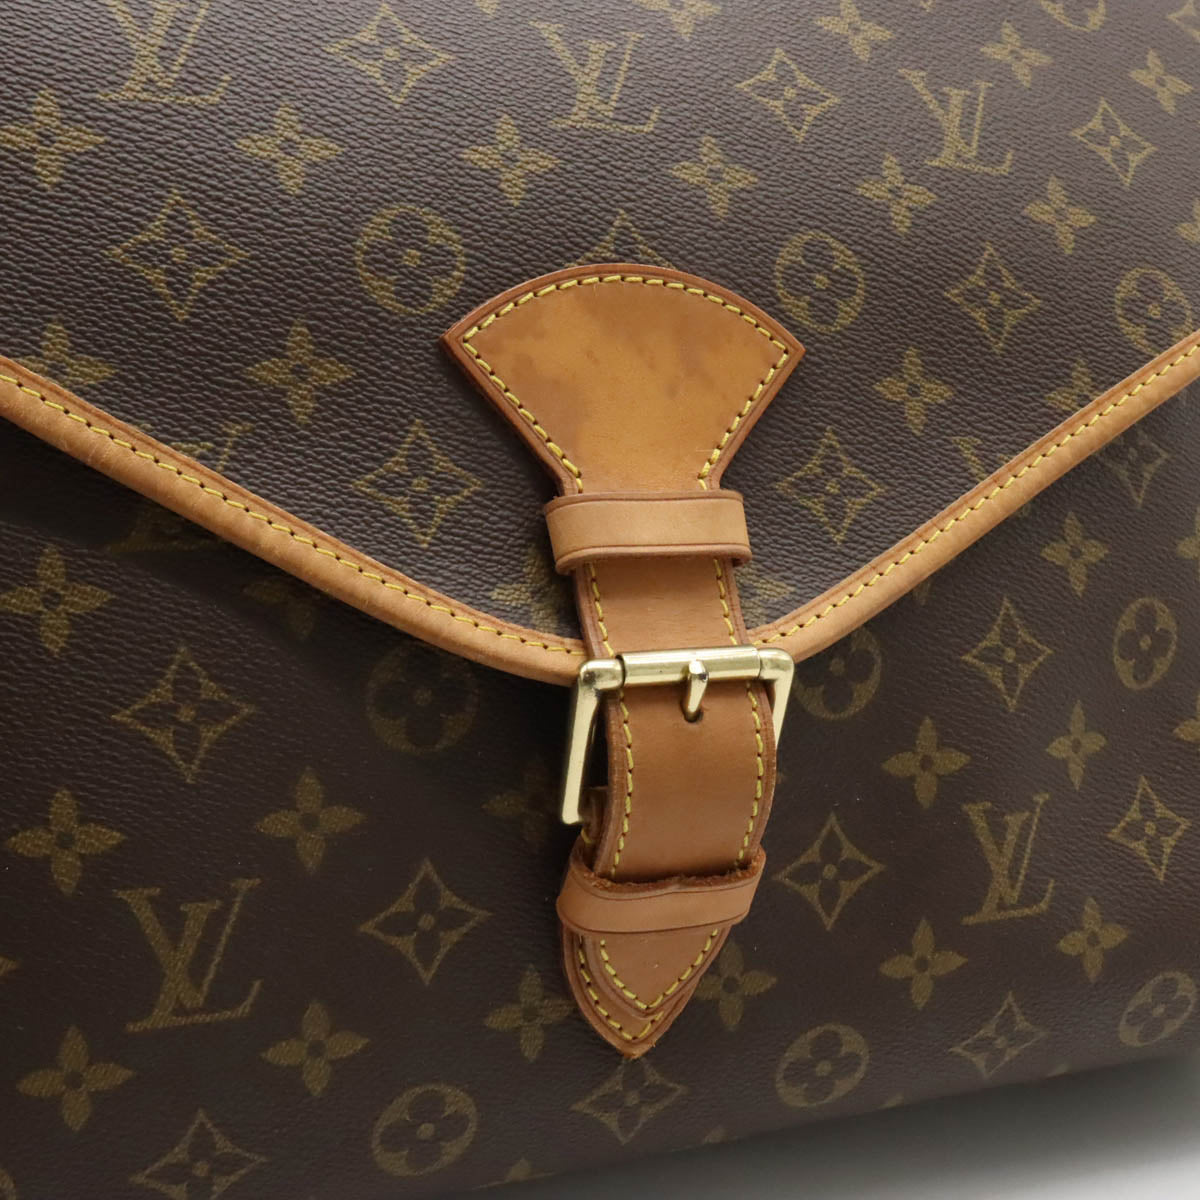 This Louis Vuitton Monogram Pochette Beverly Clutch was named